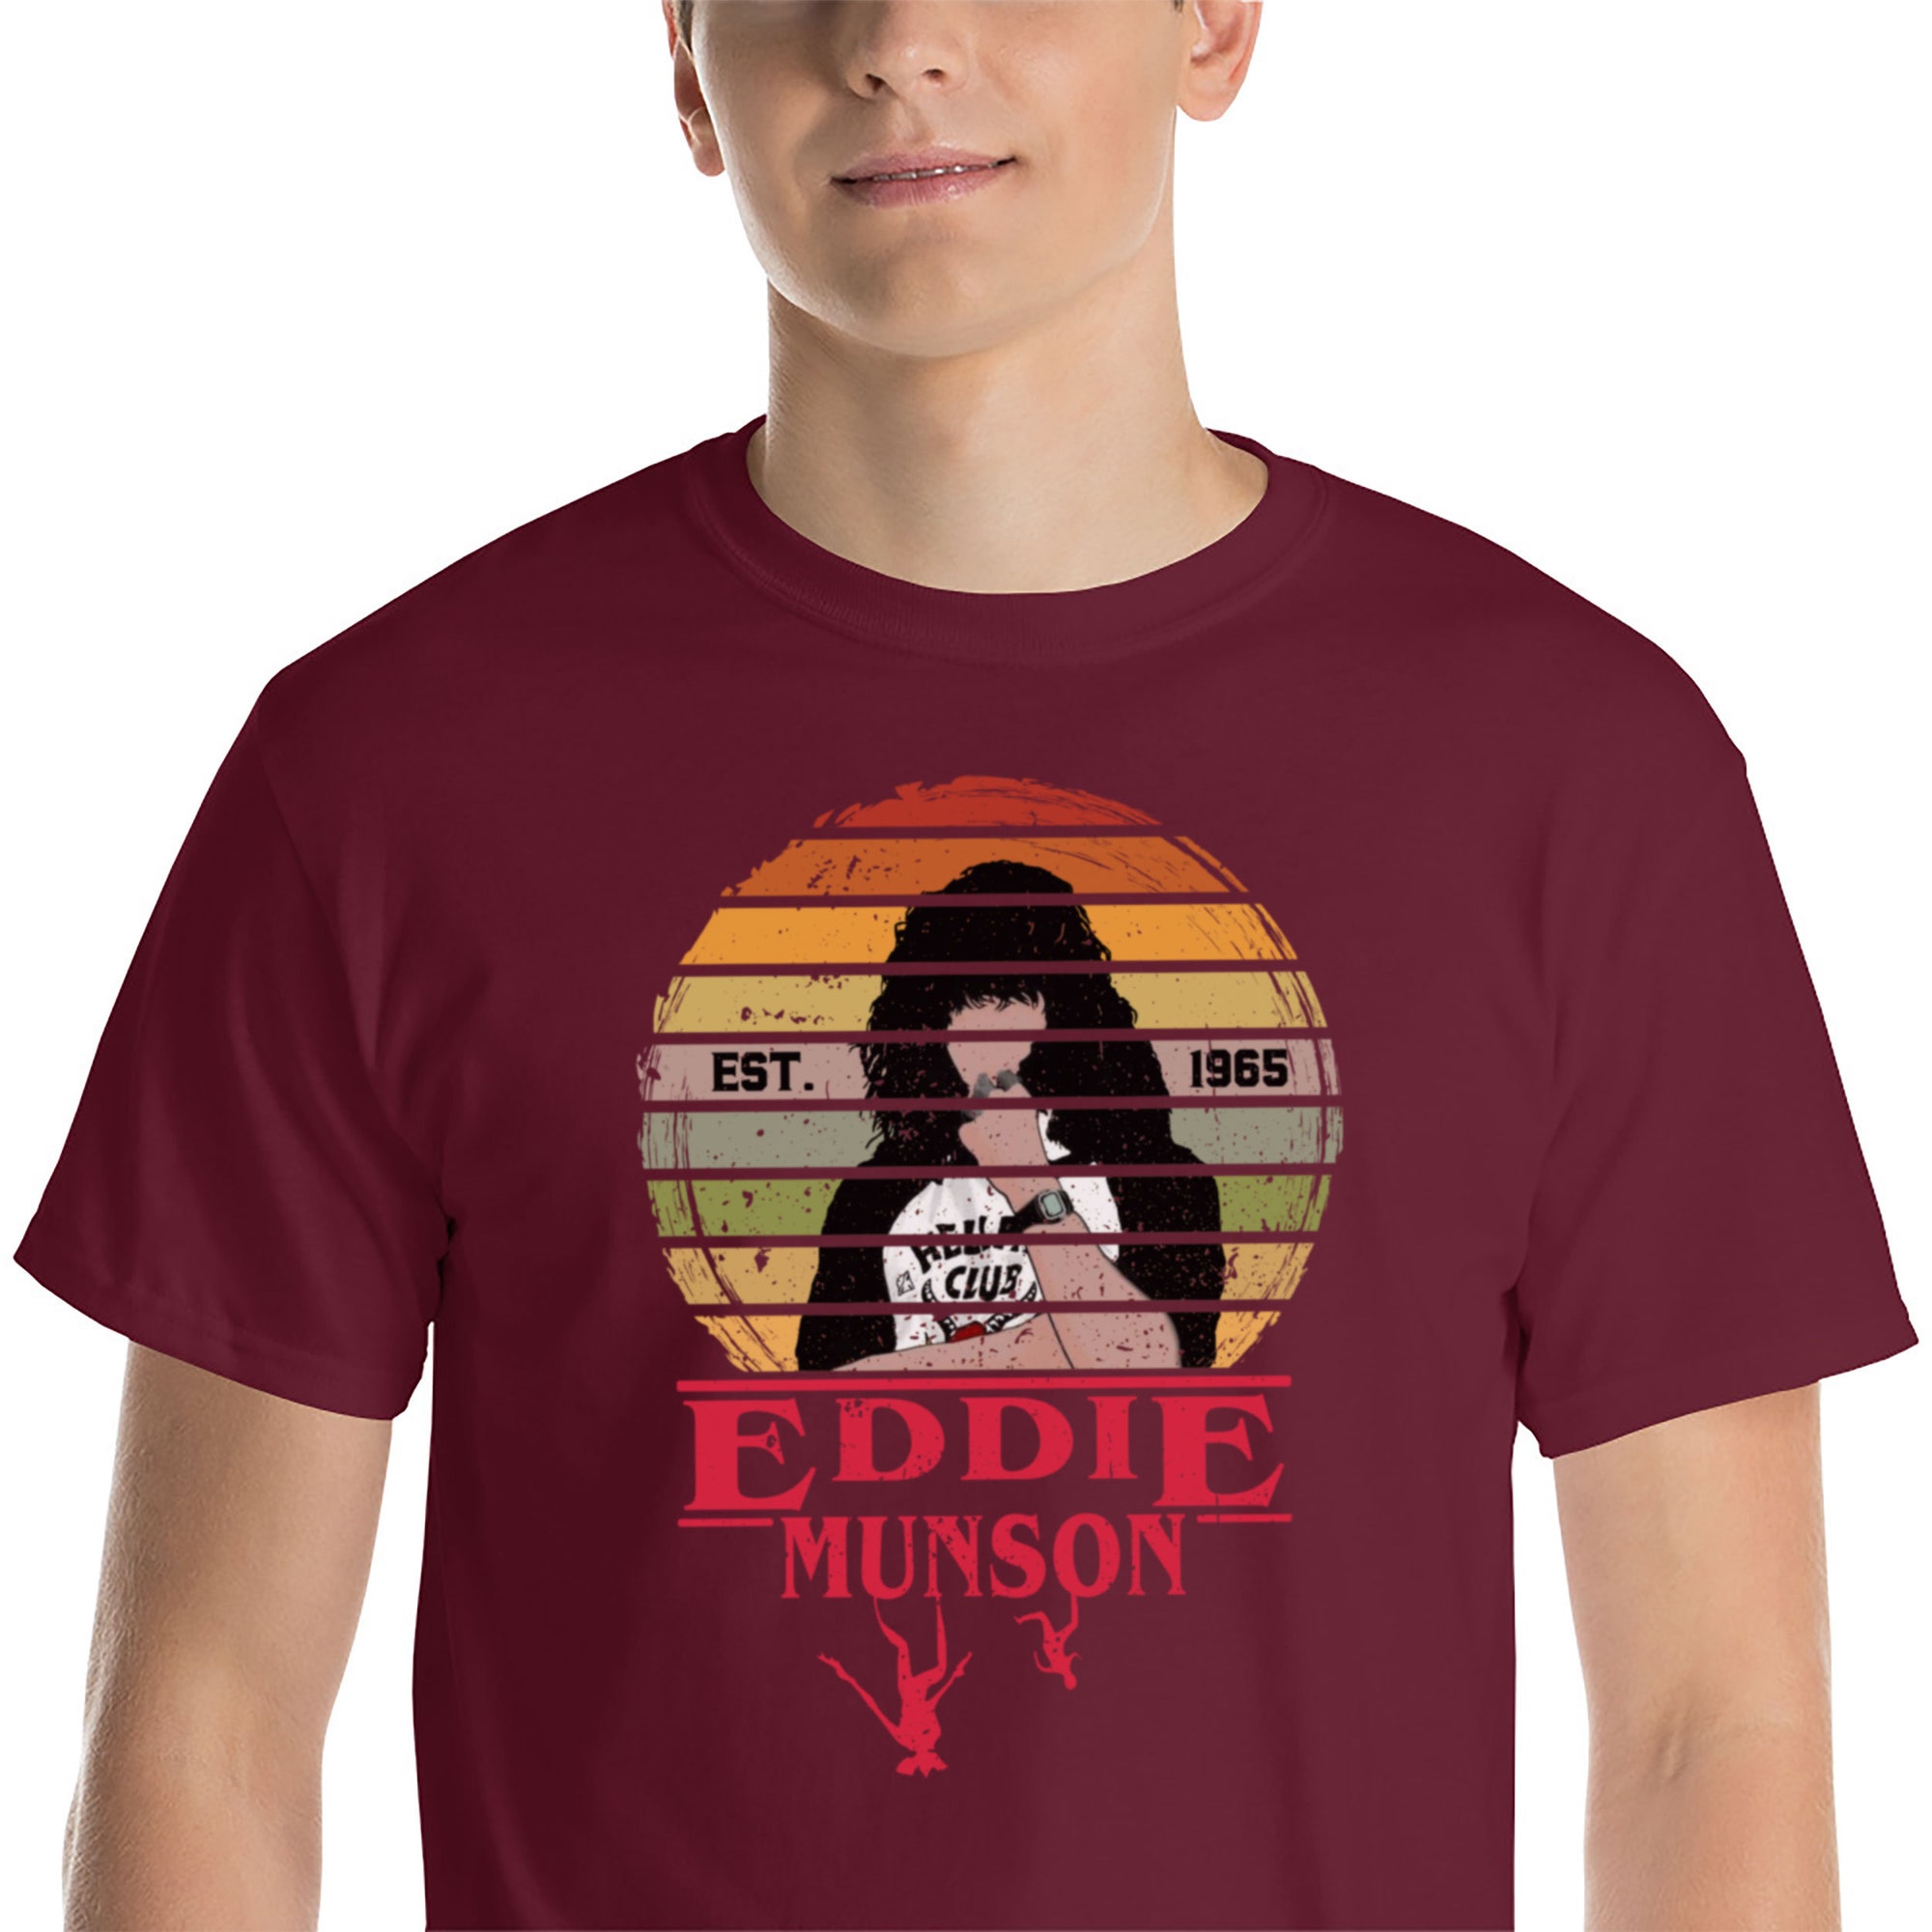 Discover Vintage Eddie Shirt, Joseph Quinn Shirt, Eddie Metal Shirt, Muson Shirt, Upside Down Shirt, Hell Club Shirt, Running Up Shirt, Fire Club